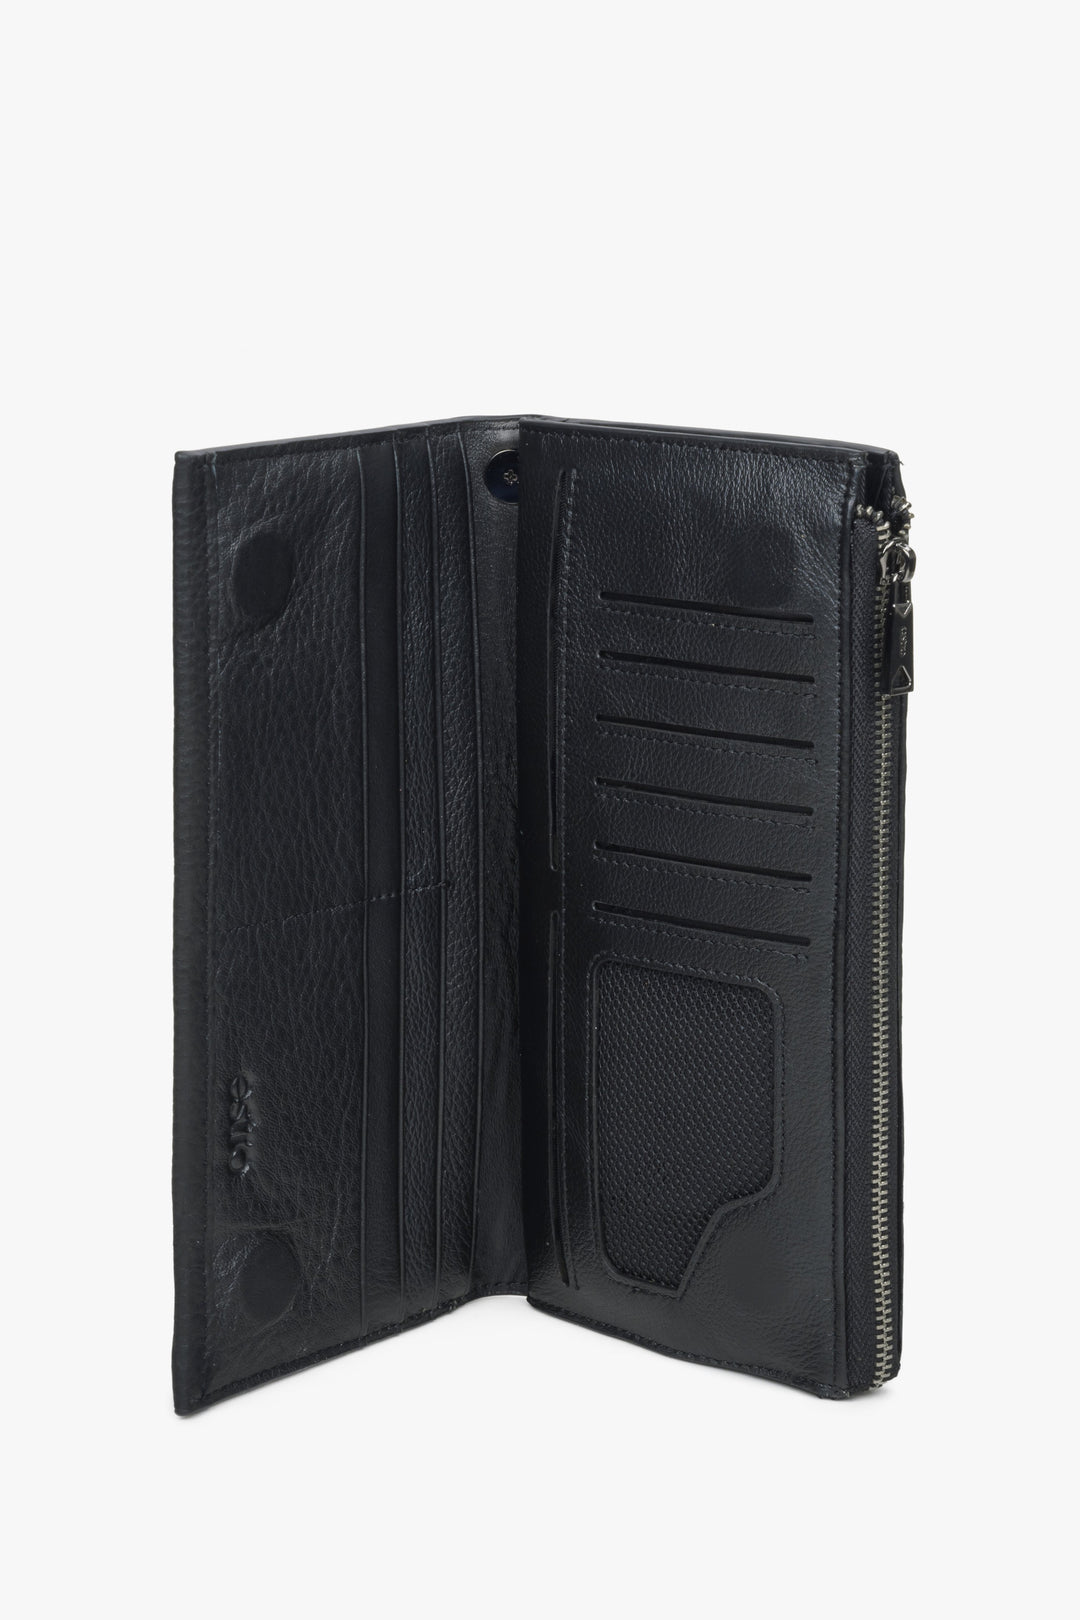 Estro spacious men's leather wallet - interior of the model.